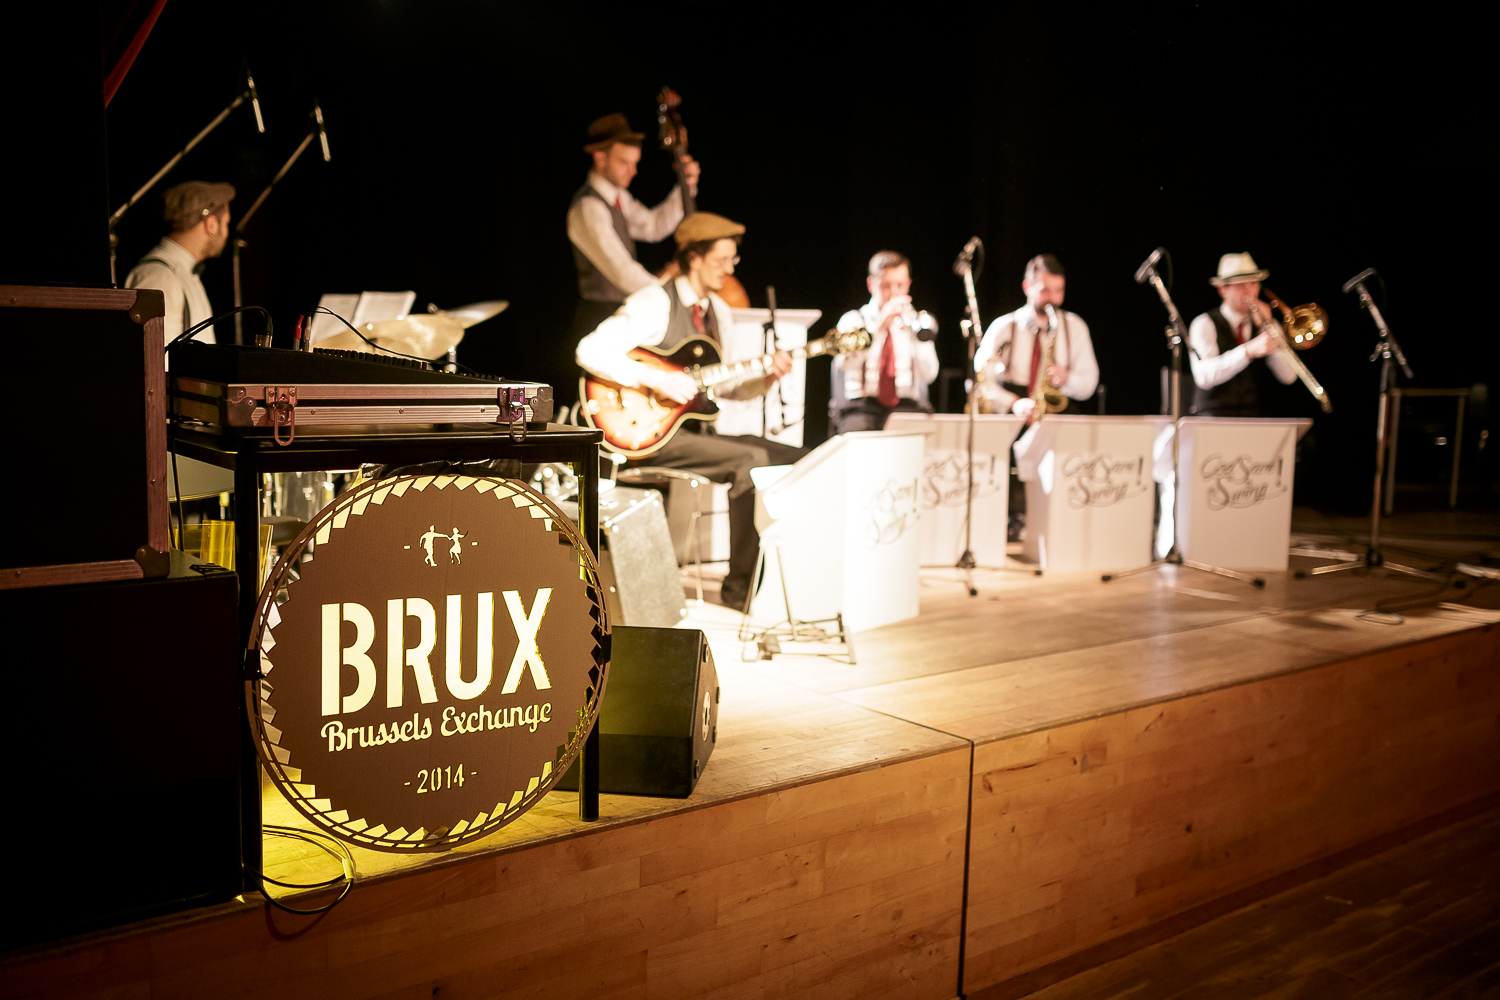  BRUX - https://www.facebook.com/photosForDancersOnly / http://www.ebobrie.com/brux-brussels-exchange-2014/ 